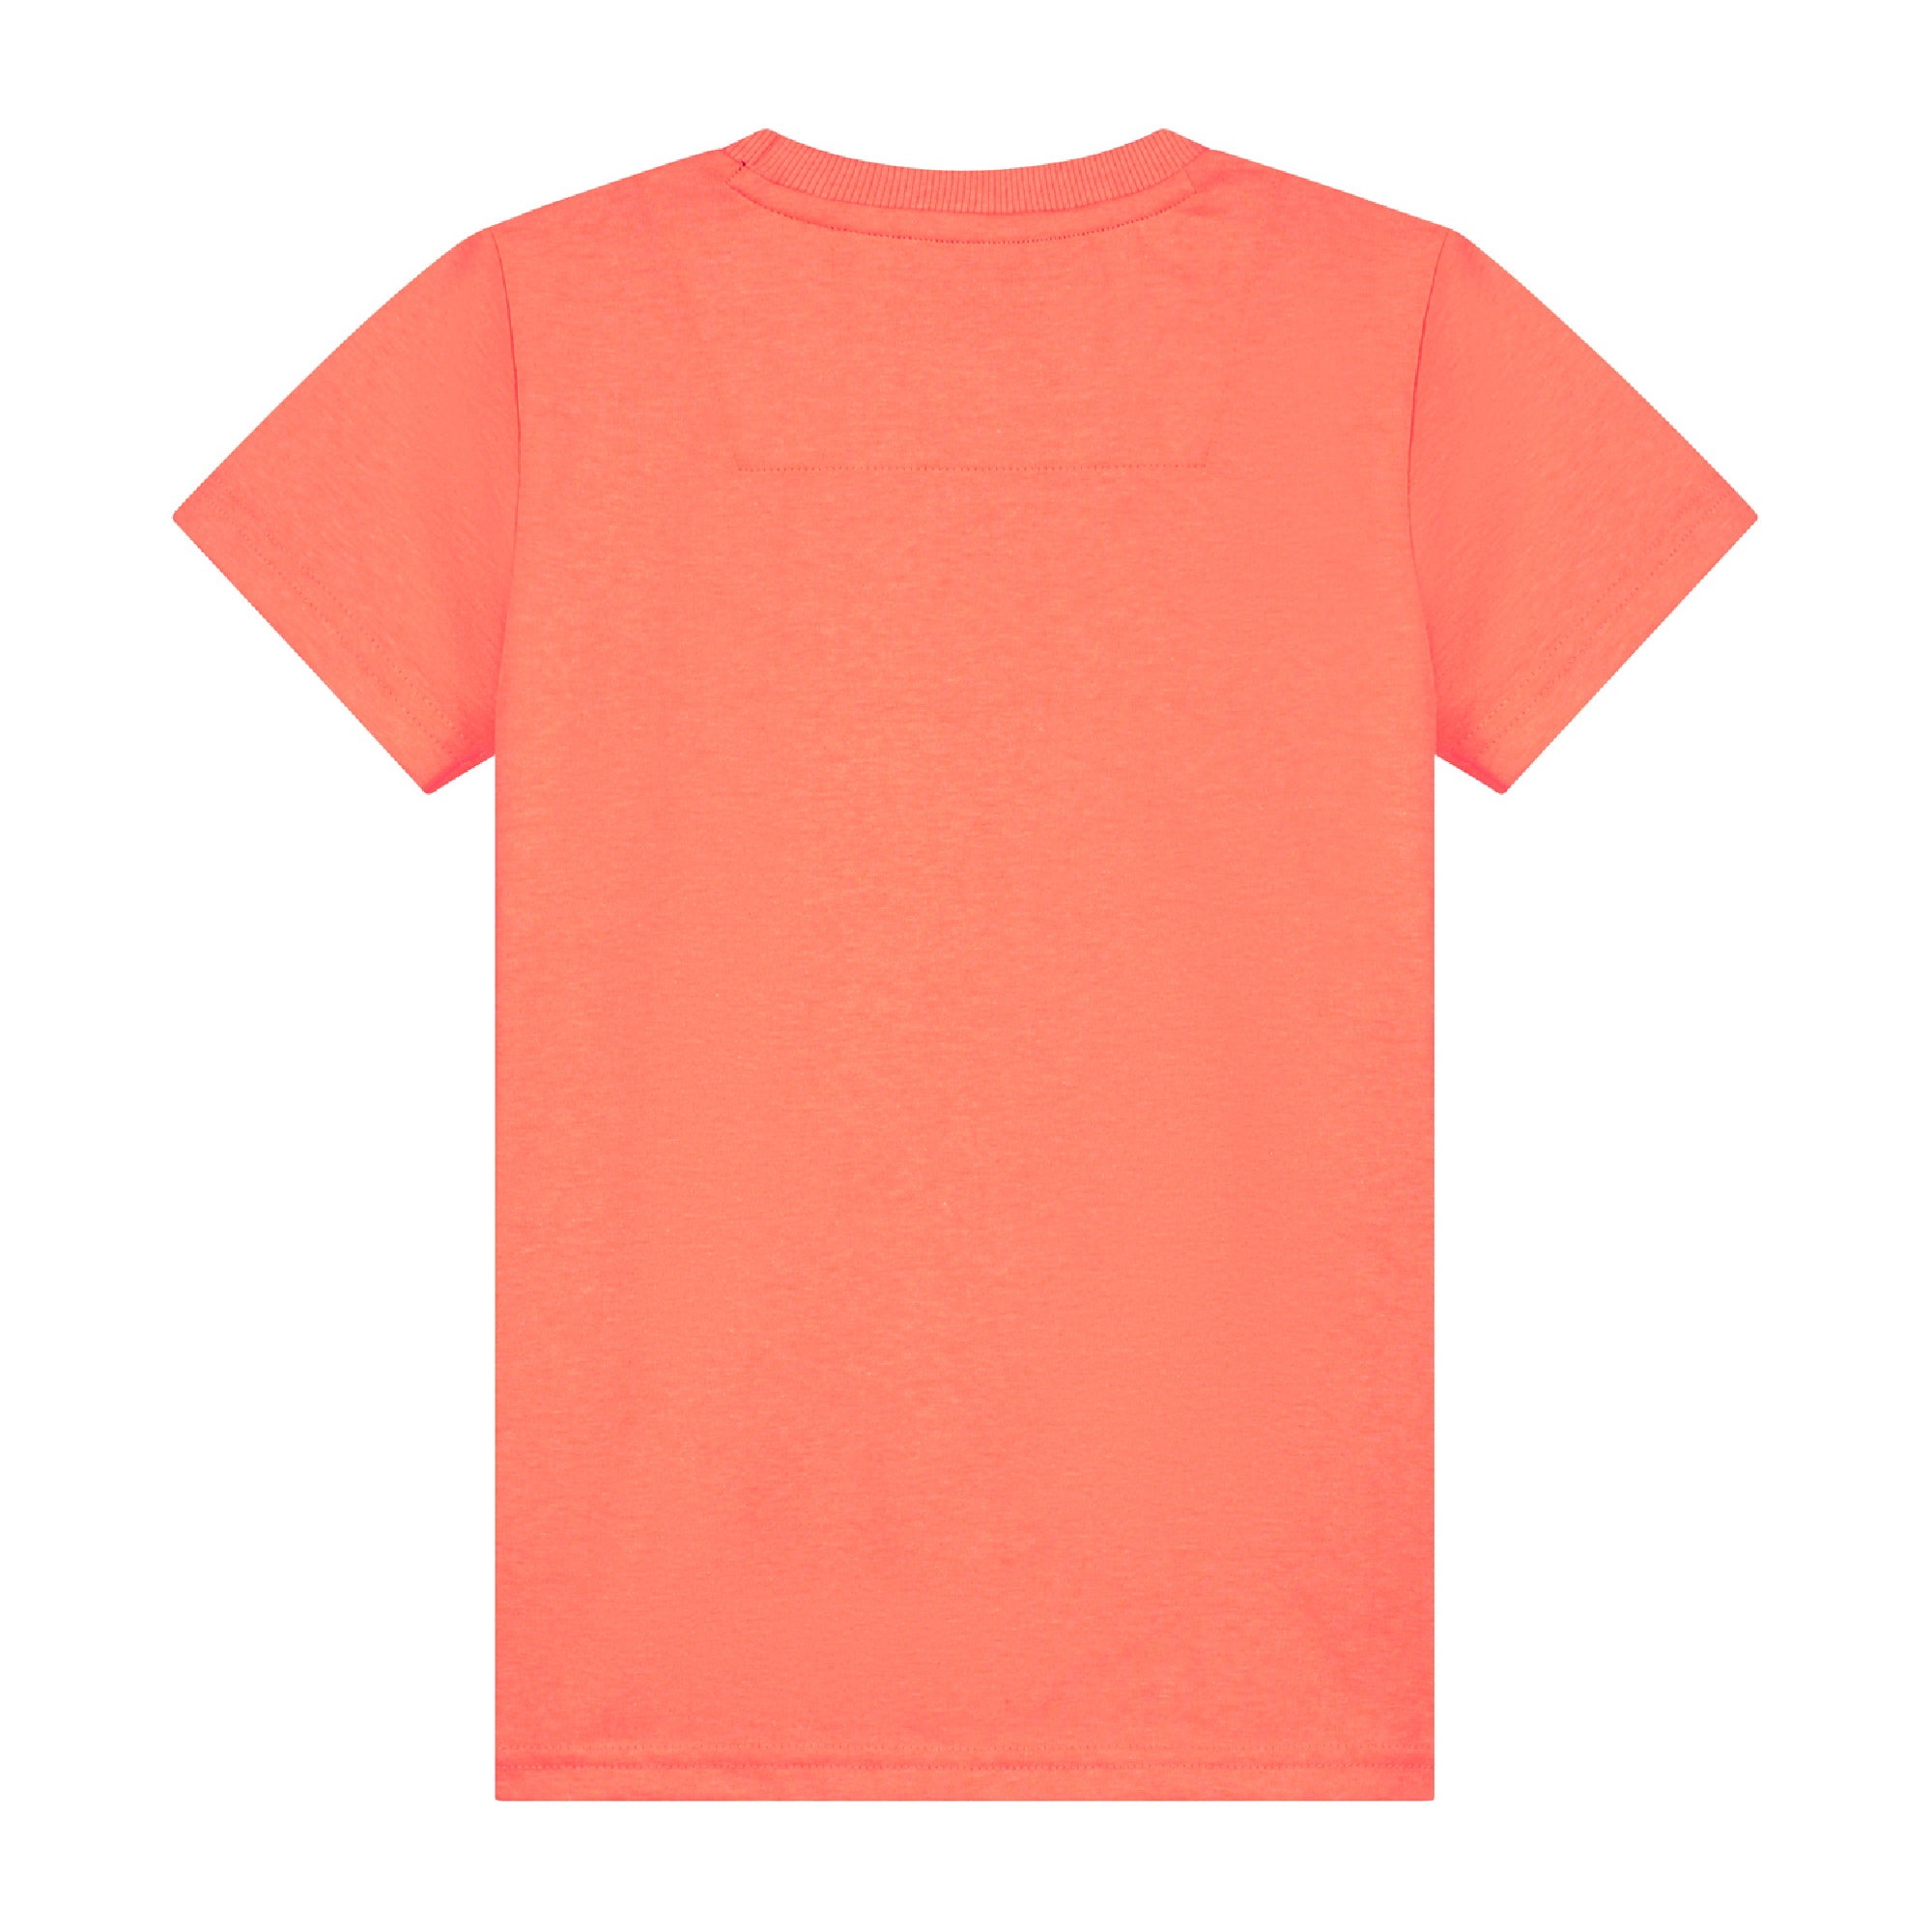 Skurk T-shirt Tiam Coral